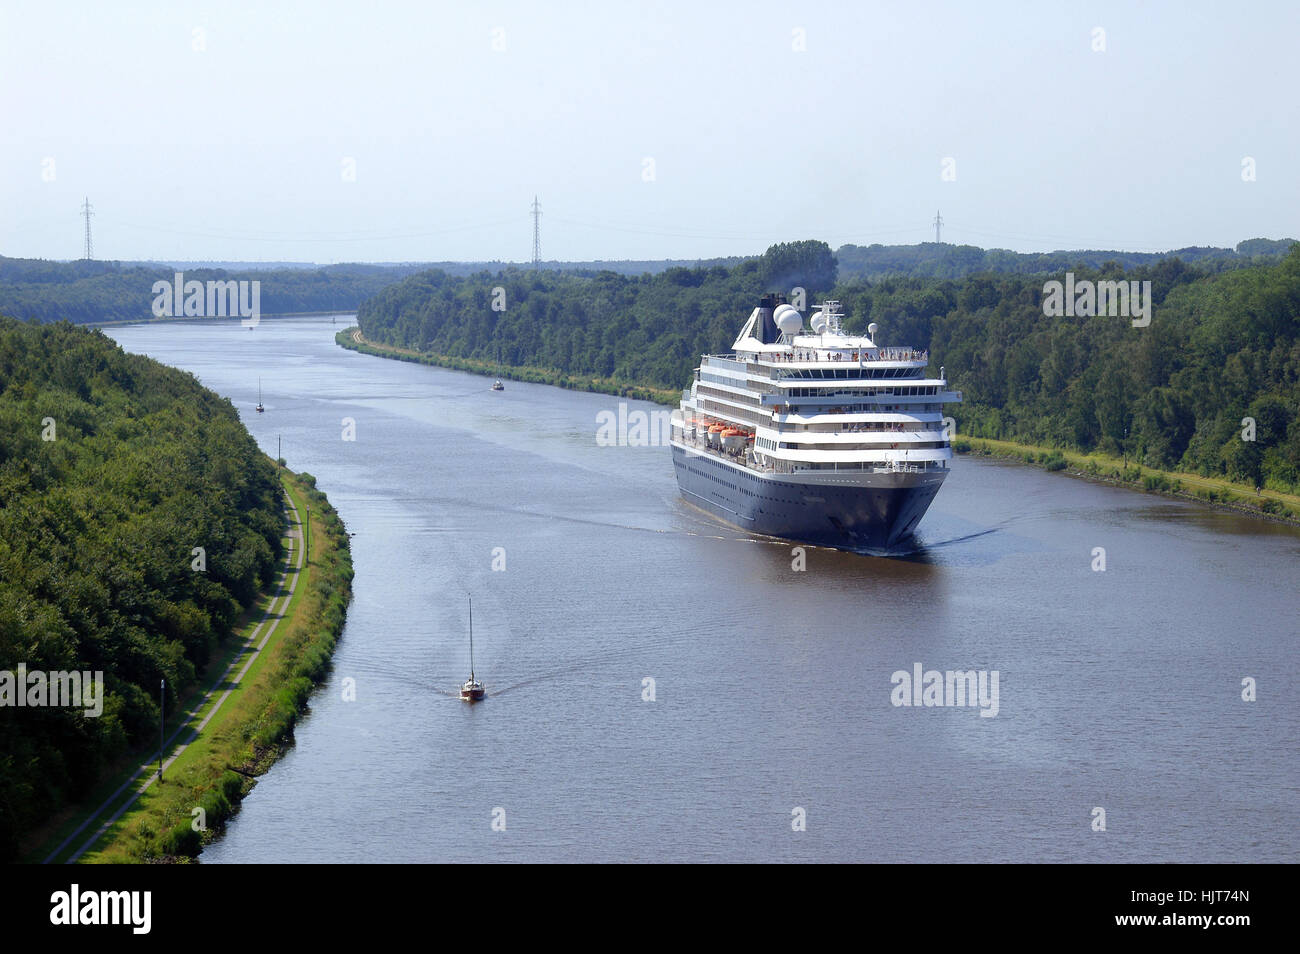 Bridge, la navigation, l'eau, de la mer du Nord, l'eau salée, la mer, l'océan, canal, mer Baltique Banque D'Images